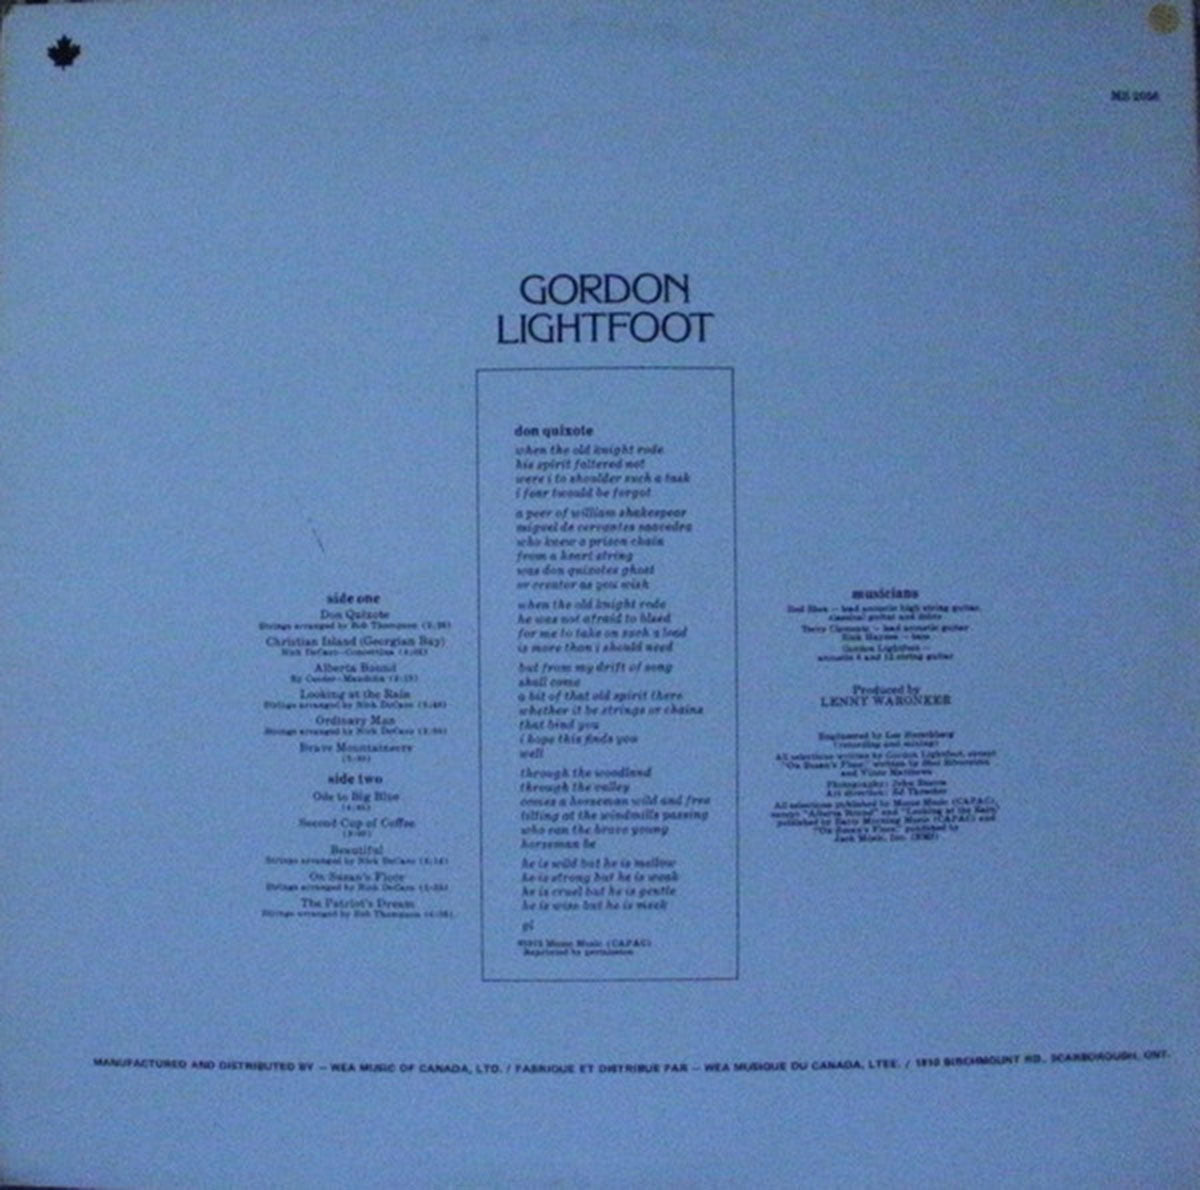 Gordon Lightfoot – Don Quixote - 1972